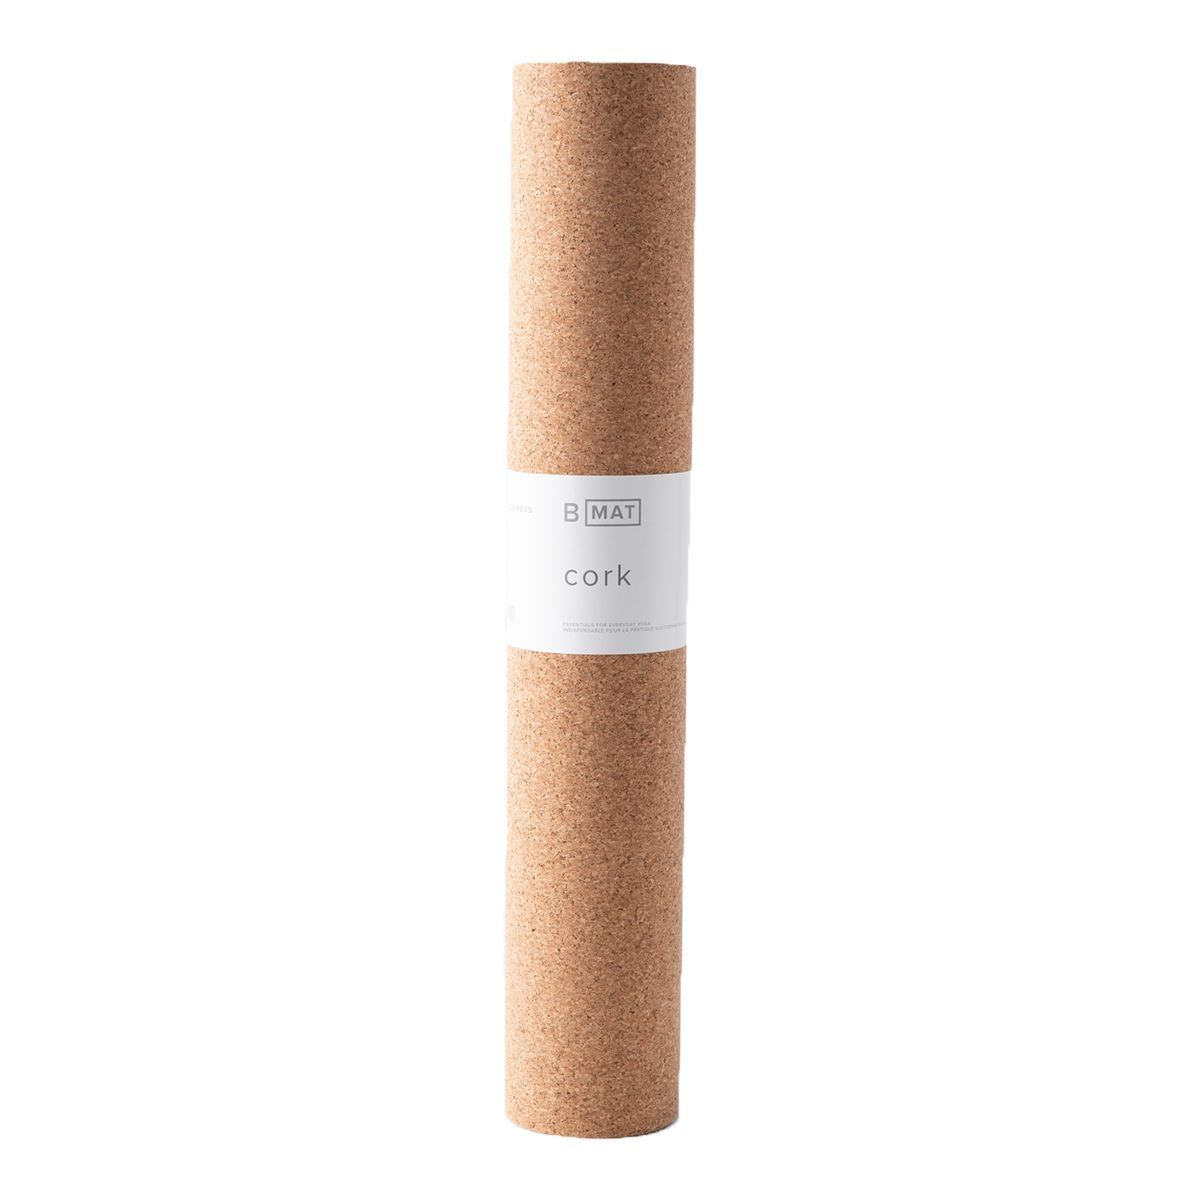 B Yoga B MAT  Yoga Mat  4mm  Cork  Rubber  Eco-Friendly